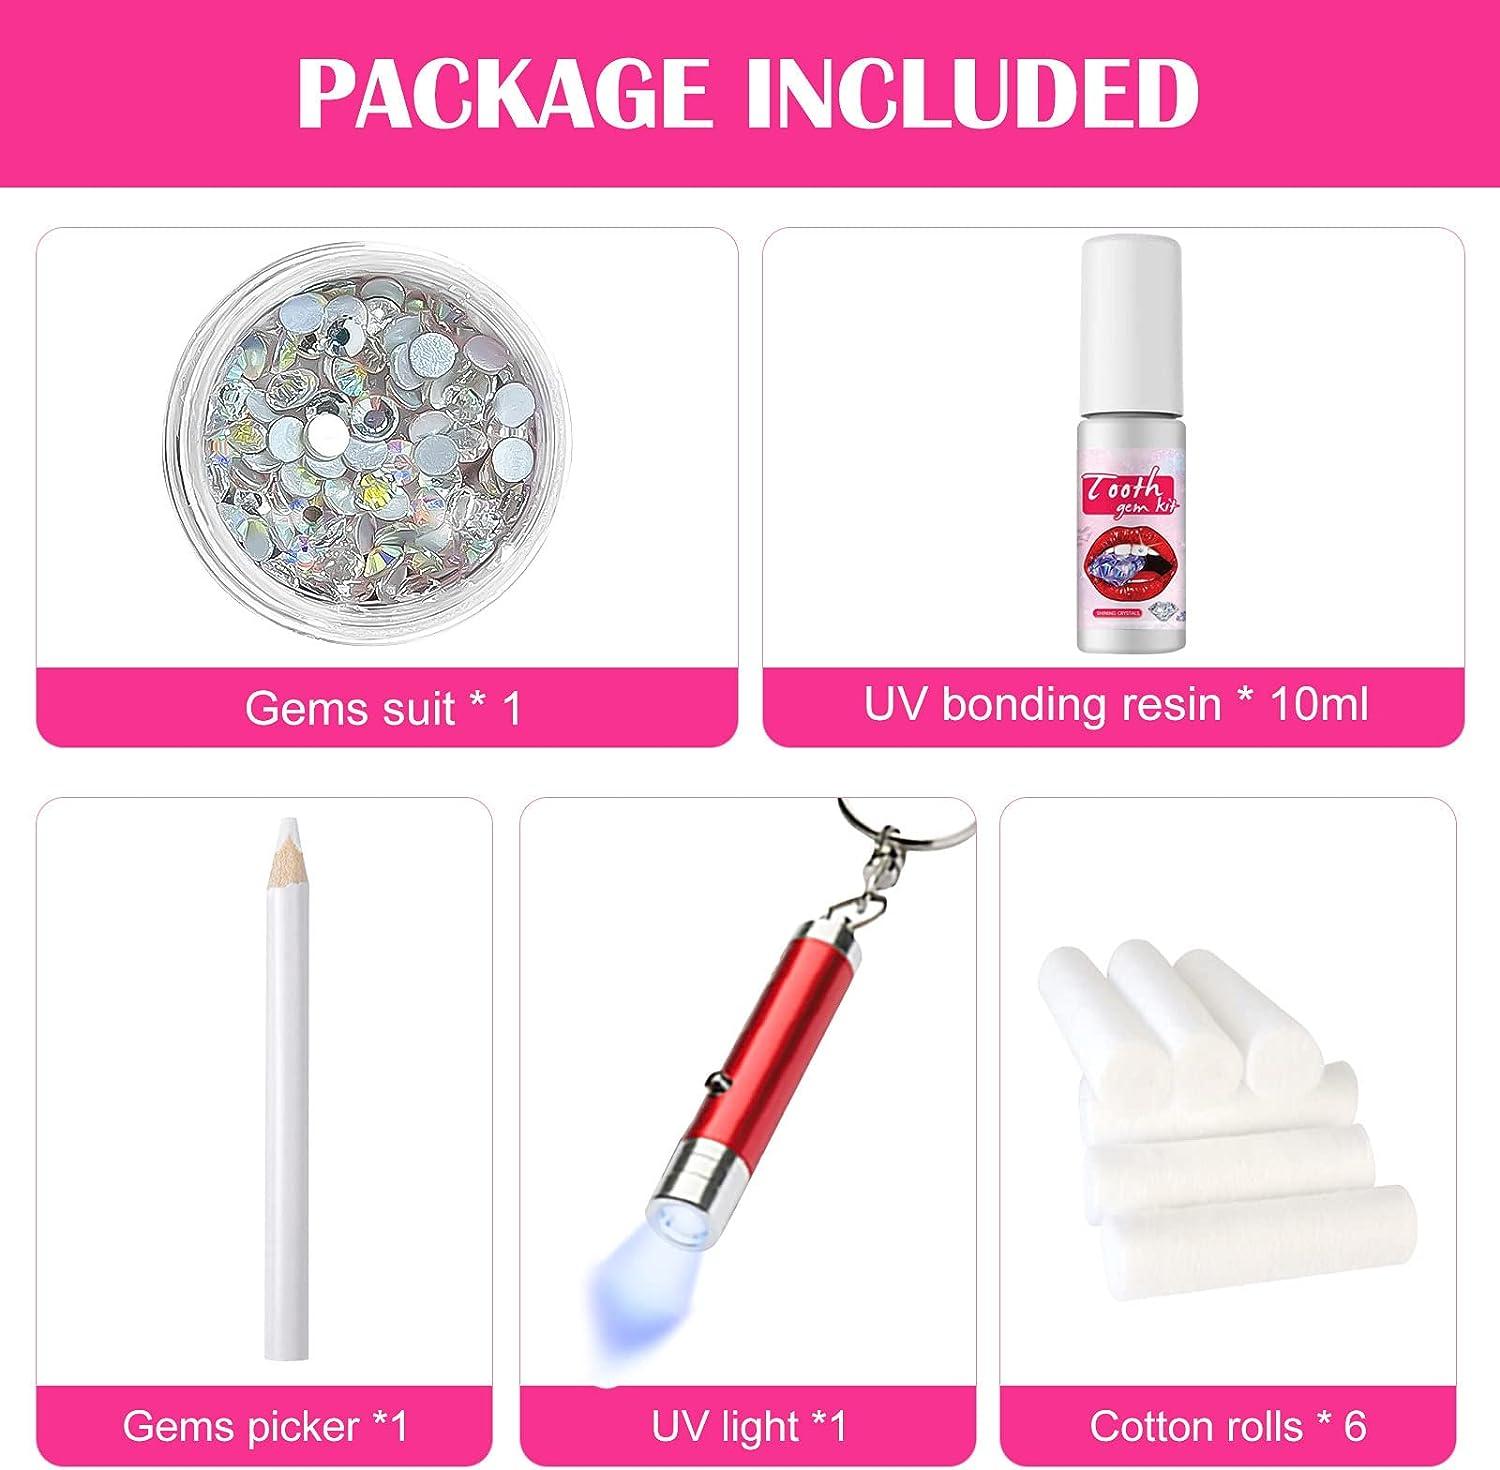 Tooth Gem Kit，Teeth Gems Kit with Glue and Light DIY Teeth Jewelry Starter  Kit， Great Tooth Jewelry Gems Kit : : Health